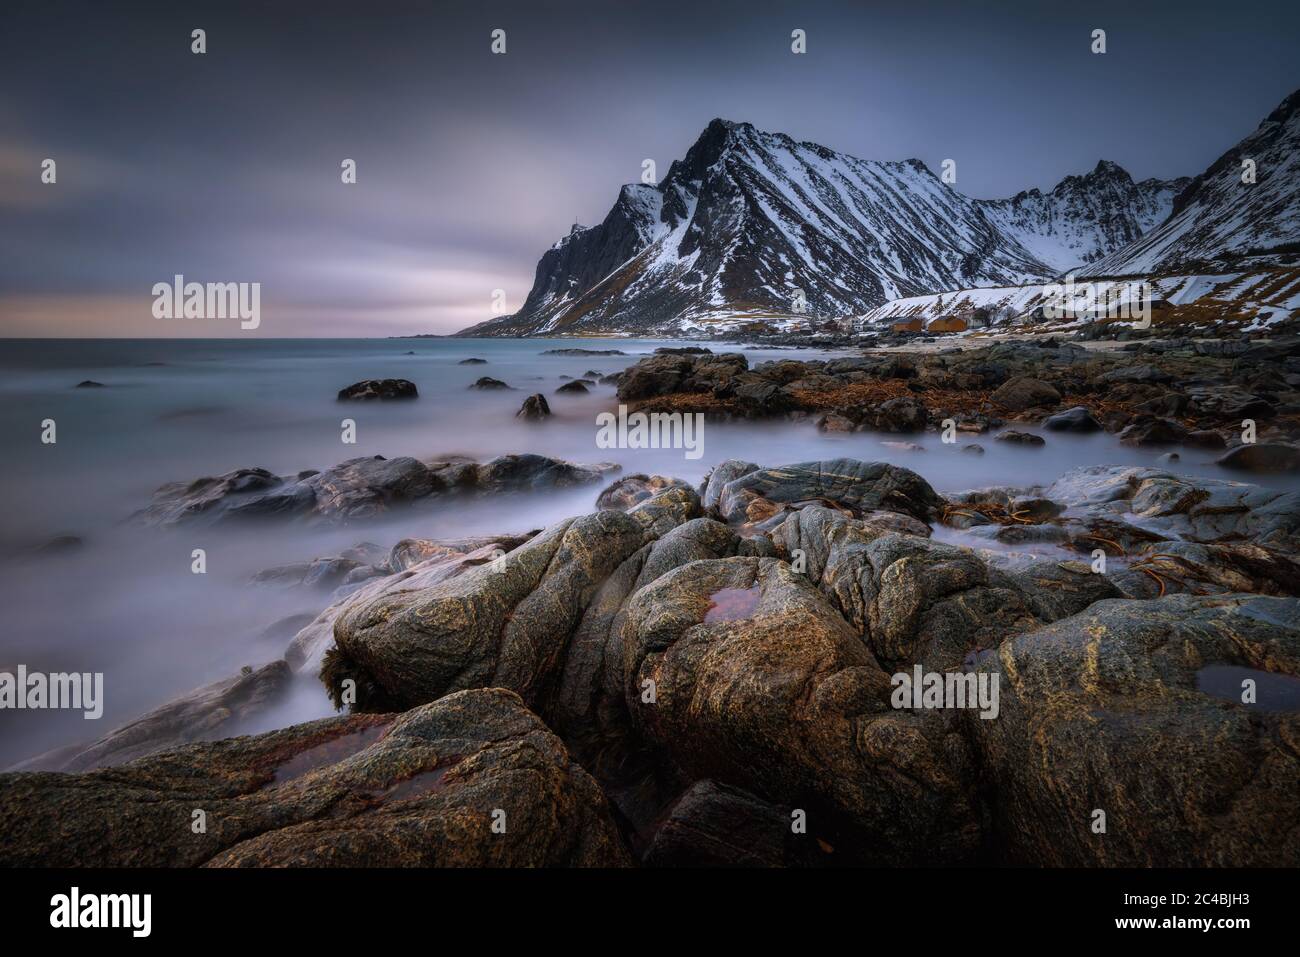 Vikten village coastline with snowy mountains in background, Norway Stock Photo